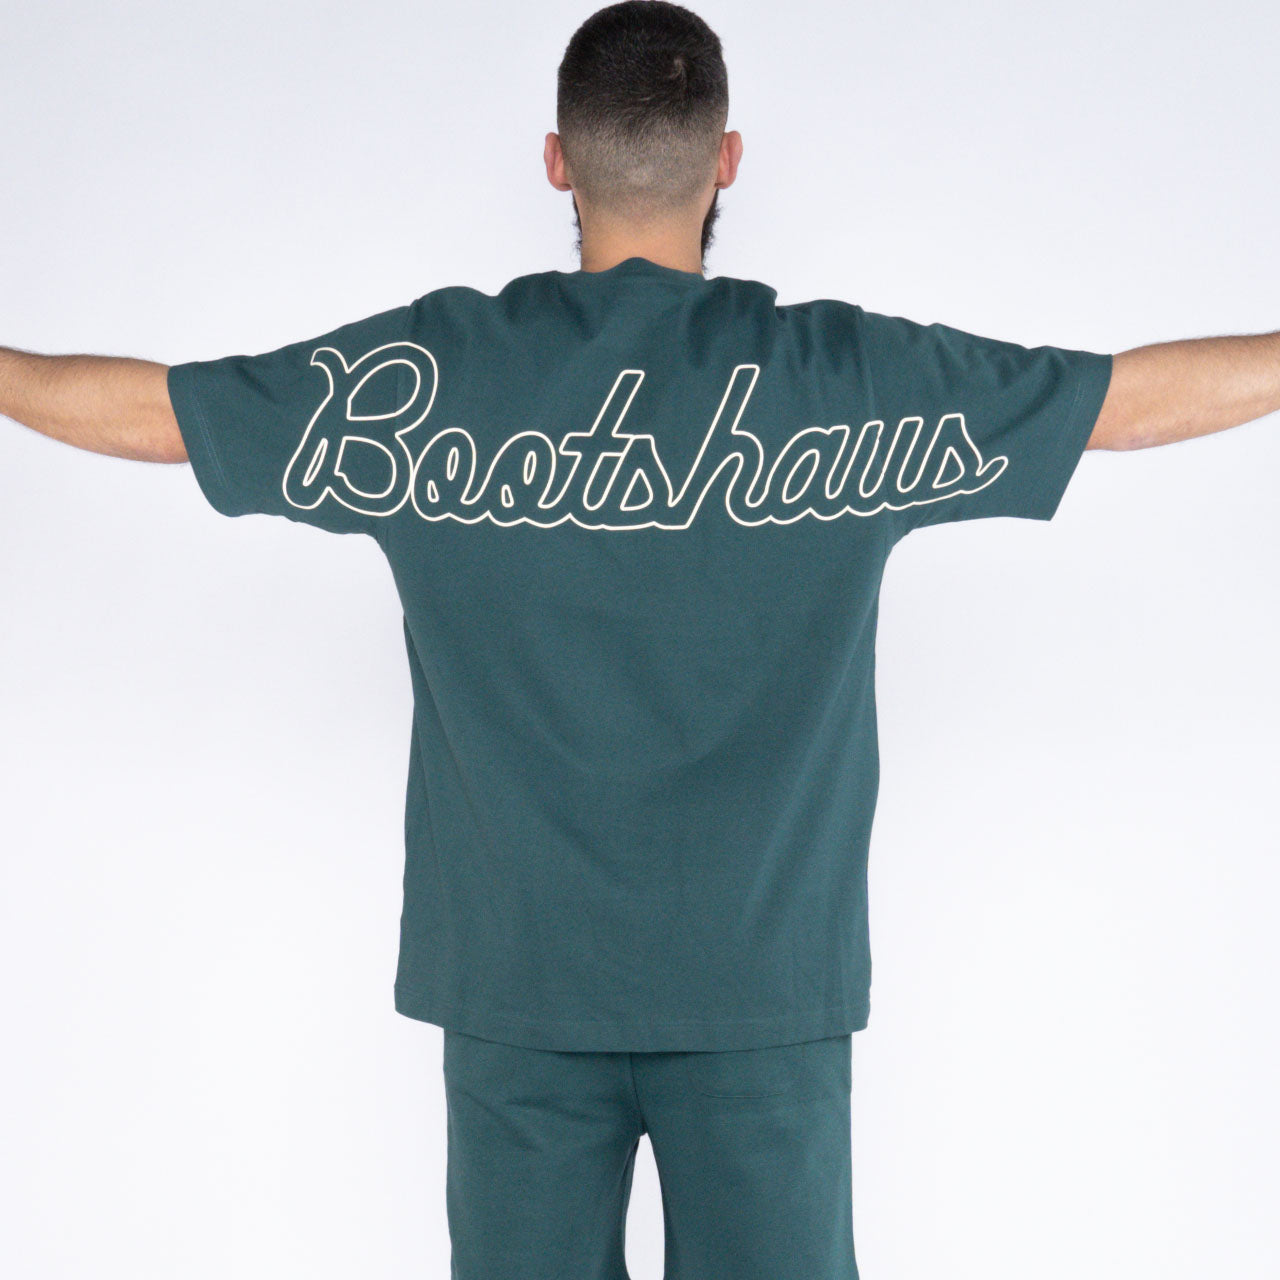 Bootshaus - Home of EDM Glazed Green Shirt